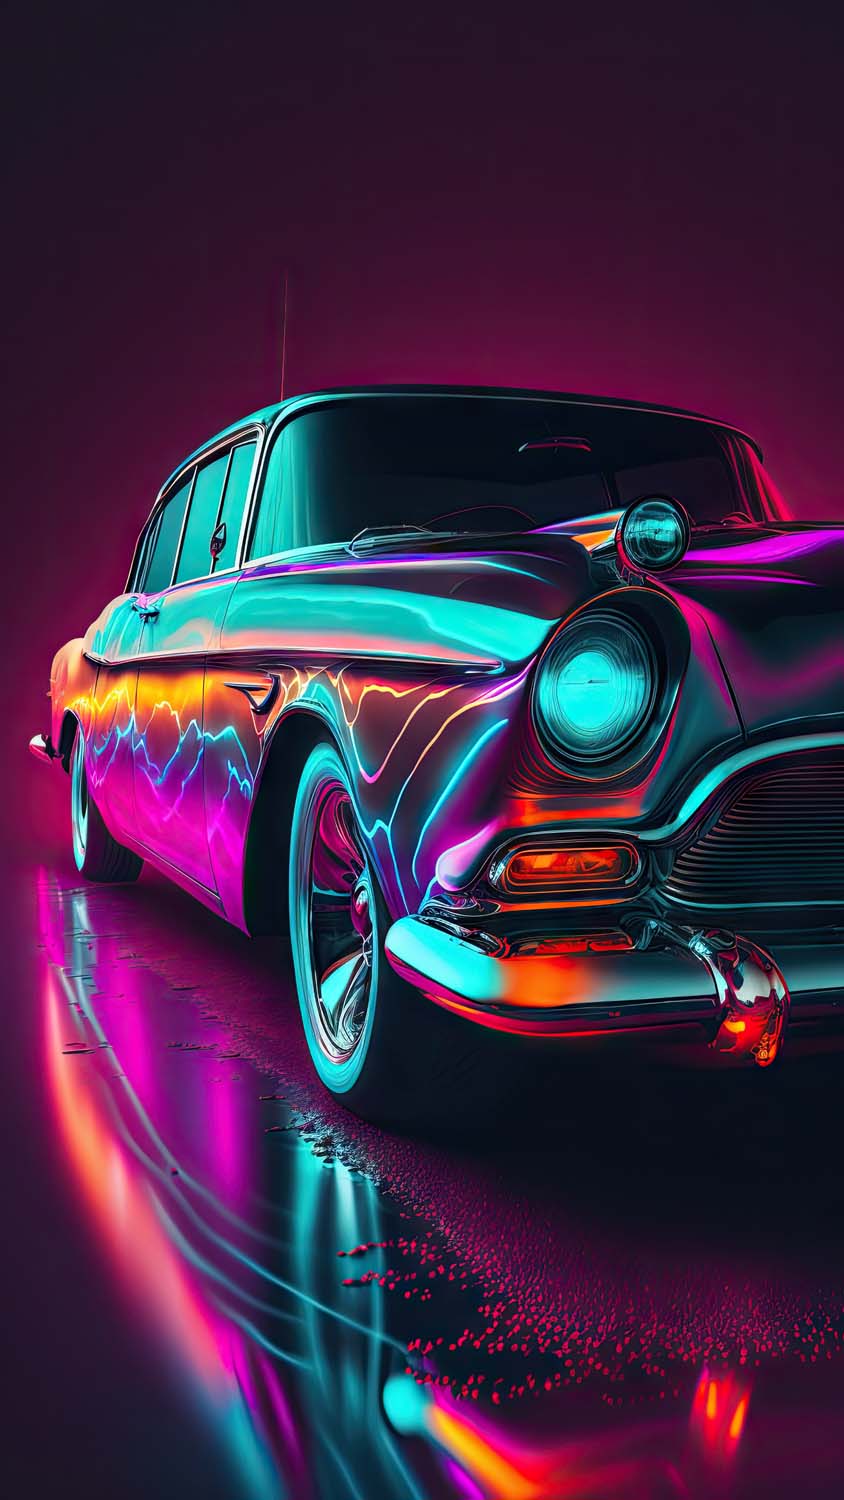 100+] Neon Car Wallpapers | Wallpapers.com